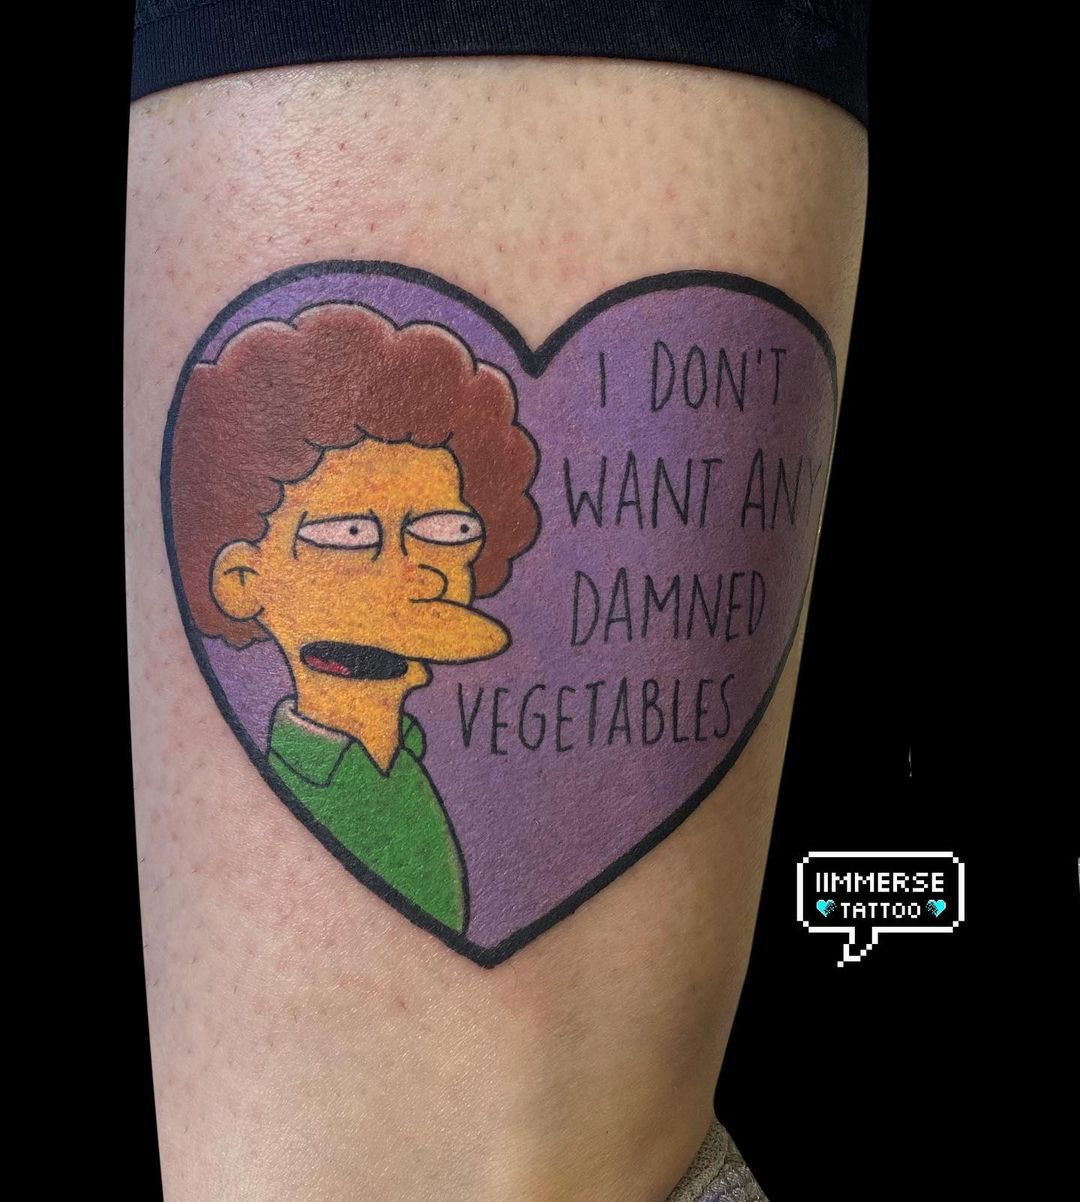 Todd Flanders hates vegetables - tattoo based on The Simpsons